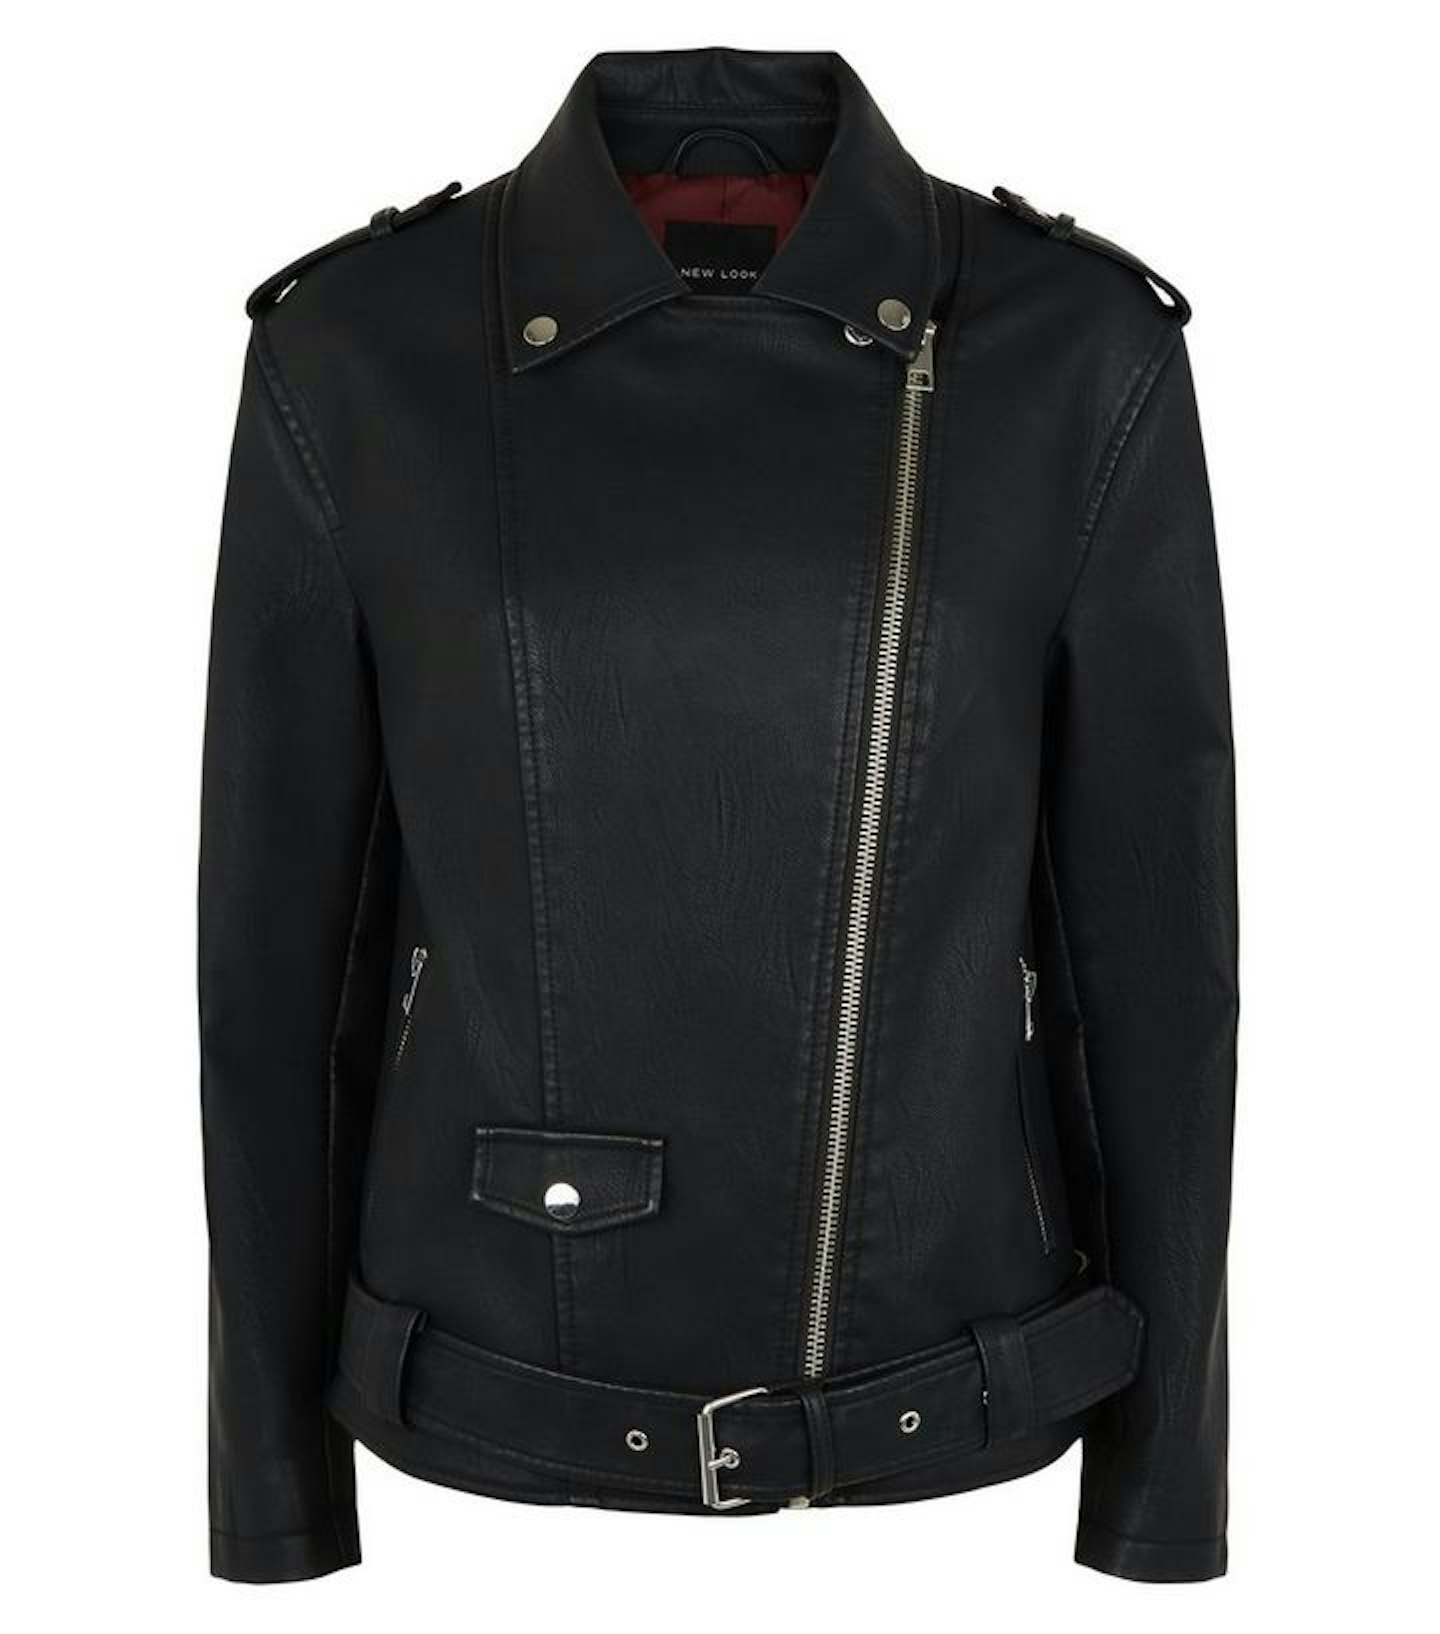 New Look, Black Vegan Leather Jacket, £39.99